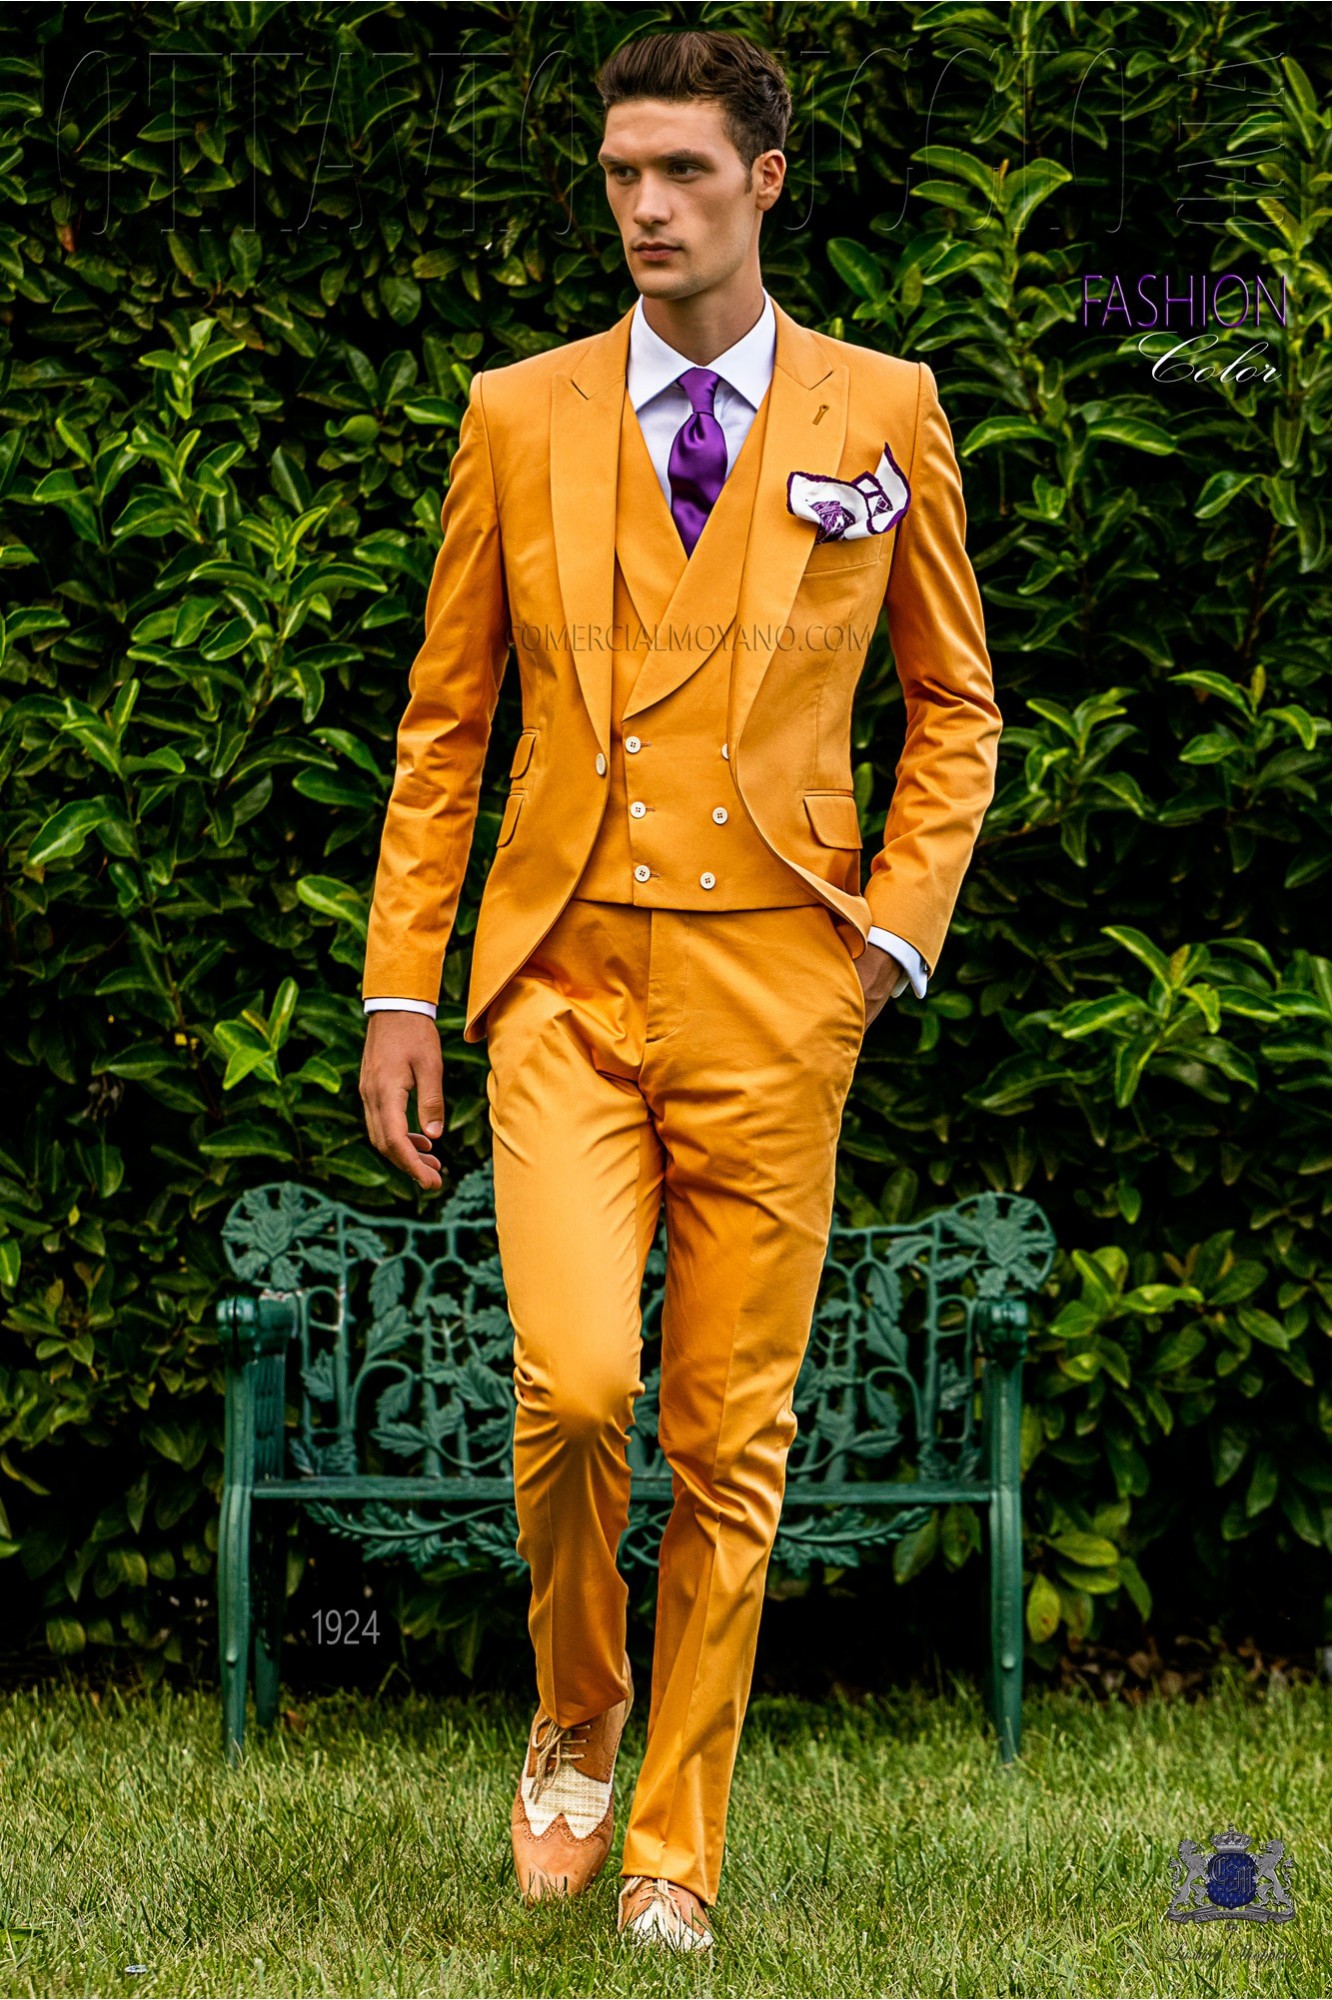 Bespoke pure cotton orange fashion suit model 1924 Mario Moyano